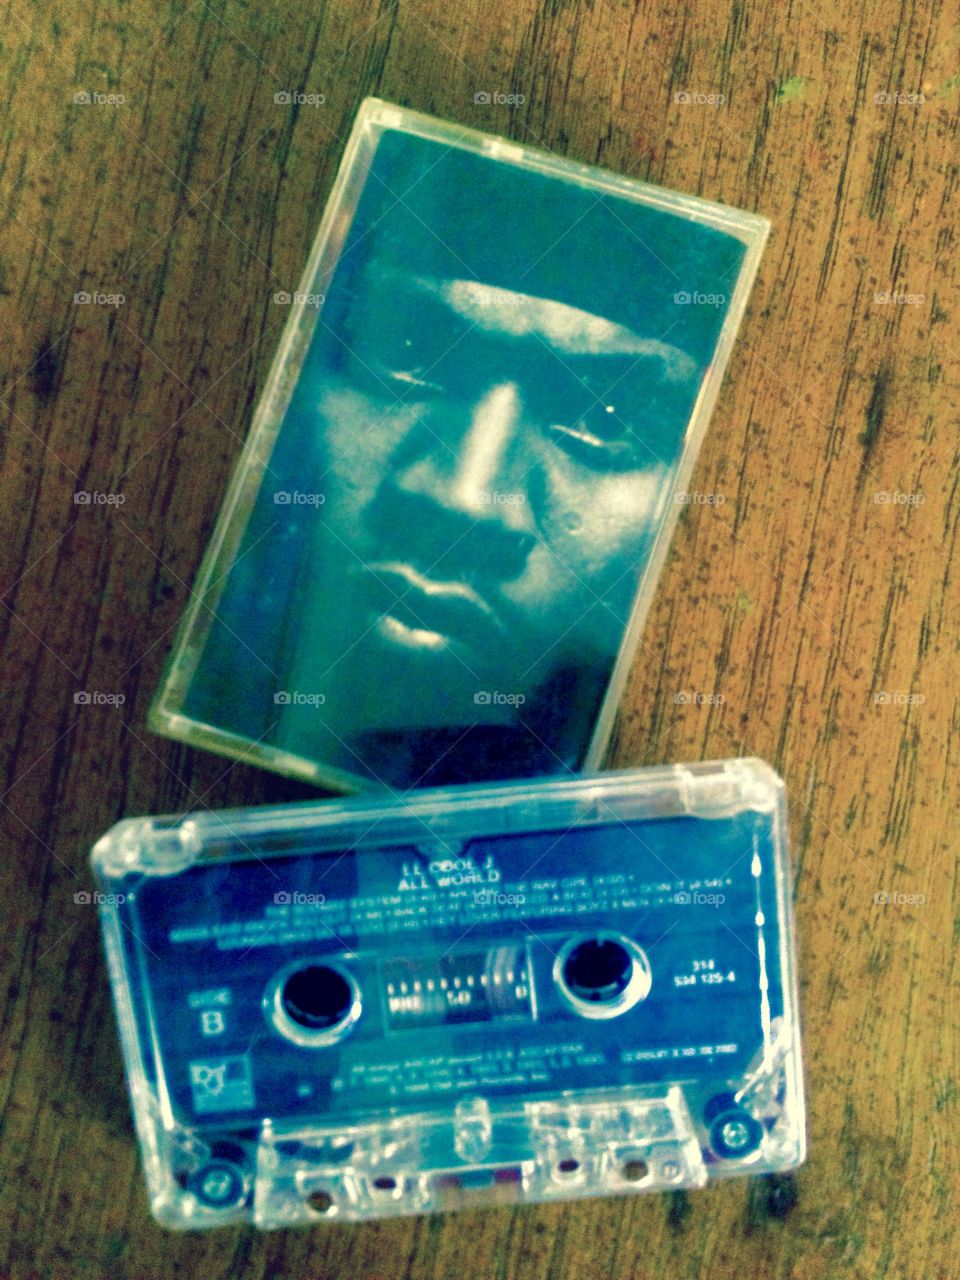 Ll cool j cassette 